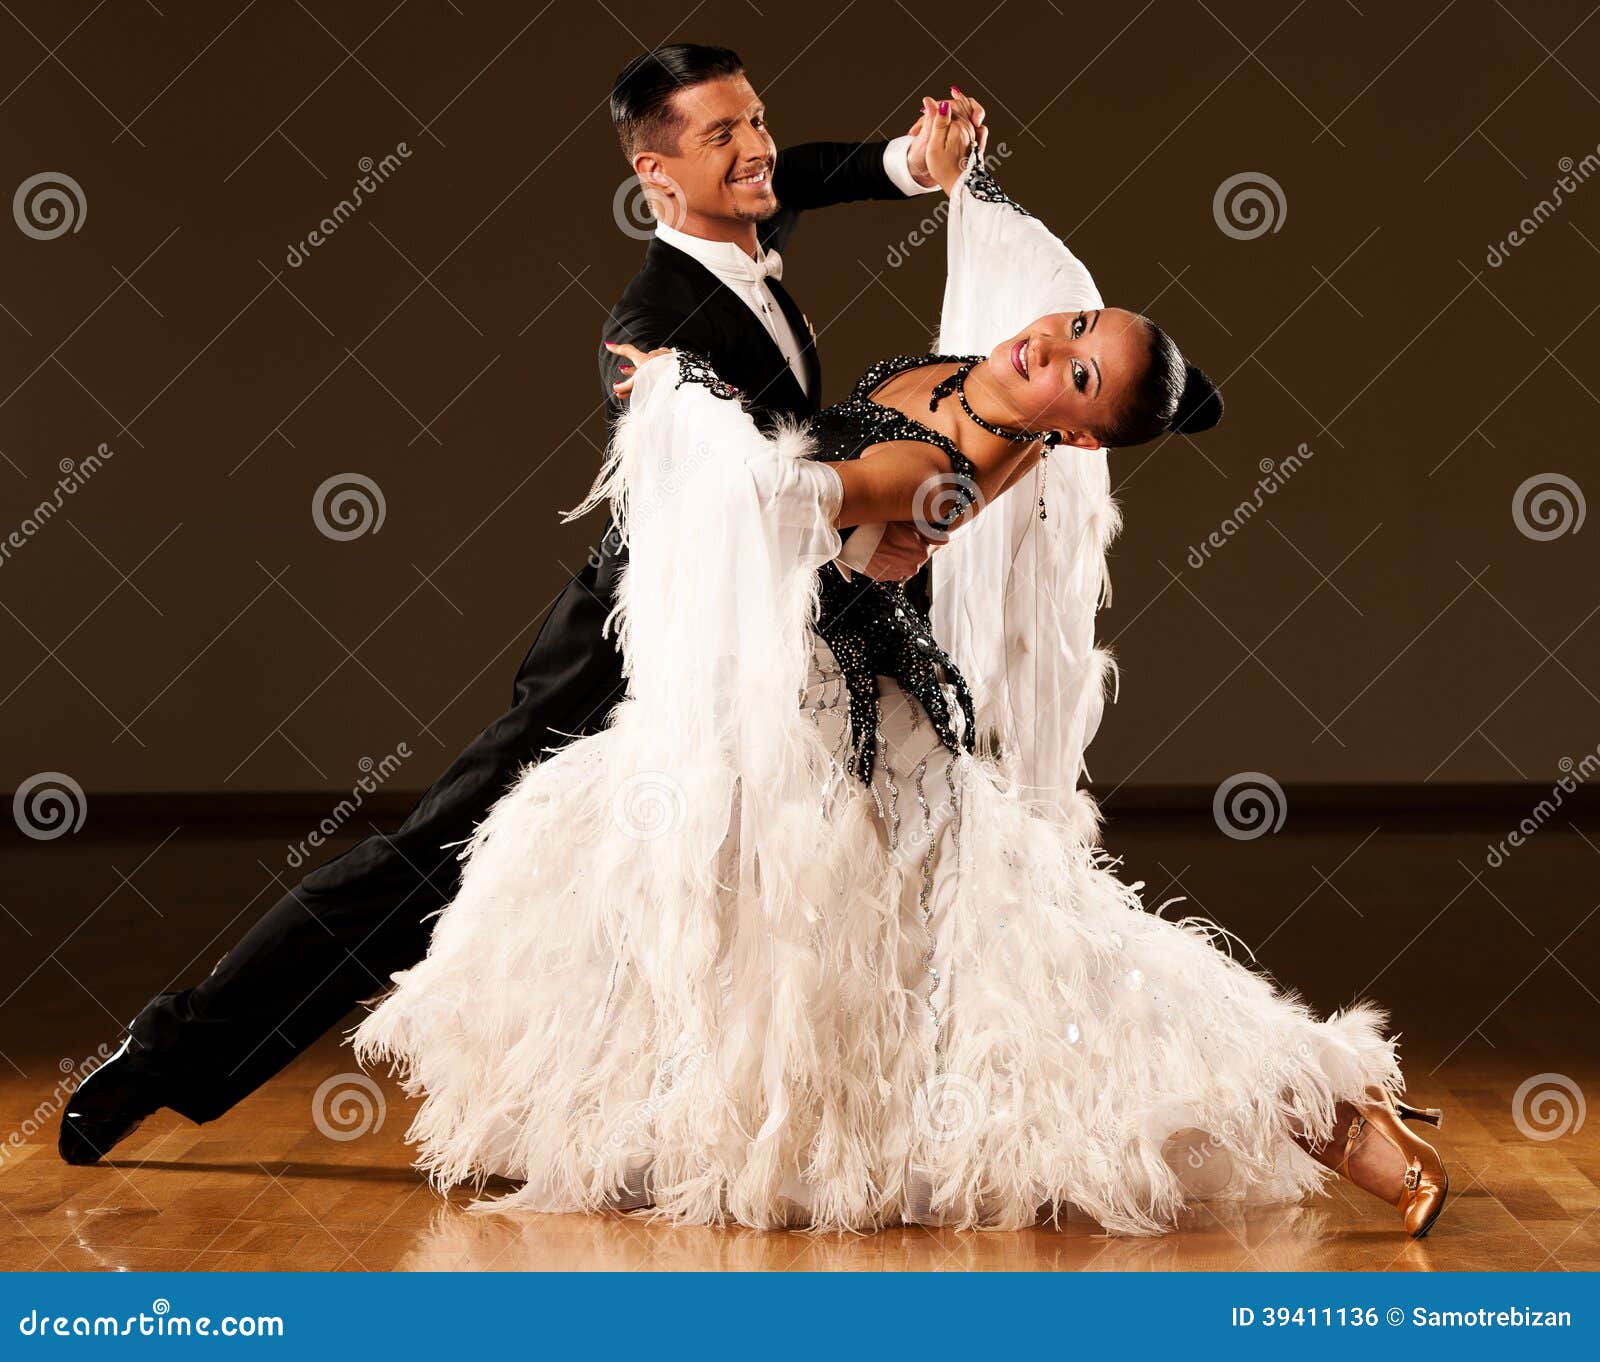 professional ballroom dance couple preform an exhibition dance